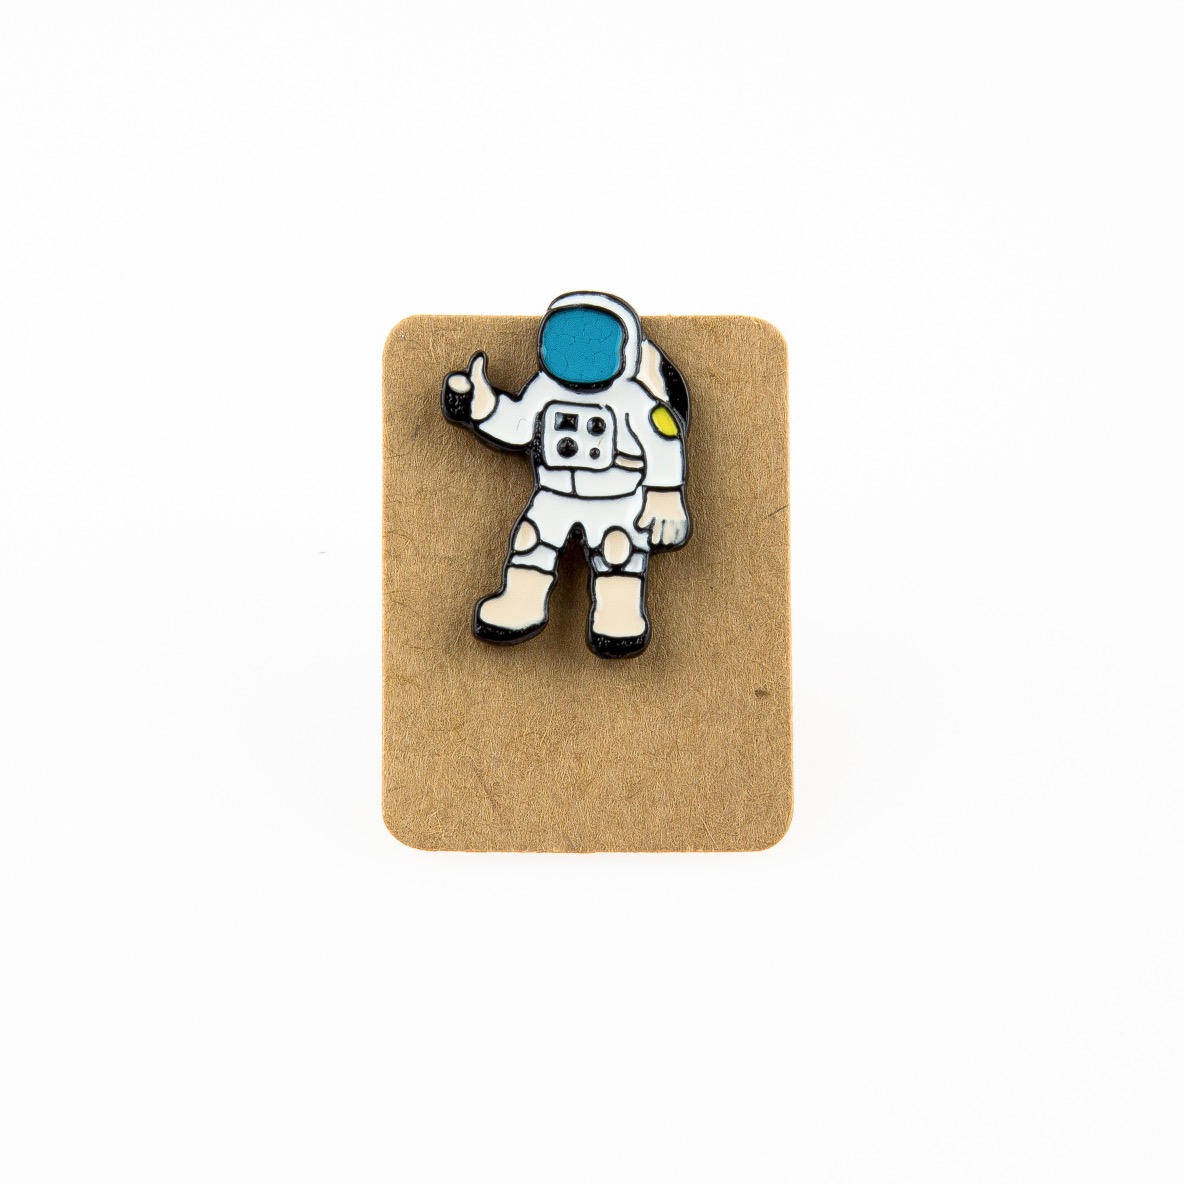 Metal Astronaut Enamel Pin Badge